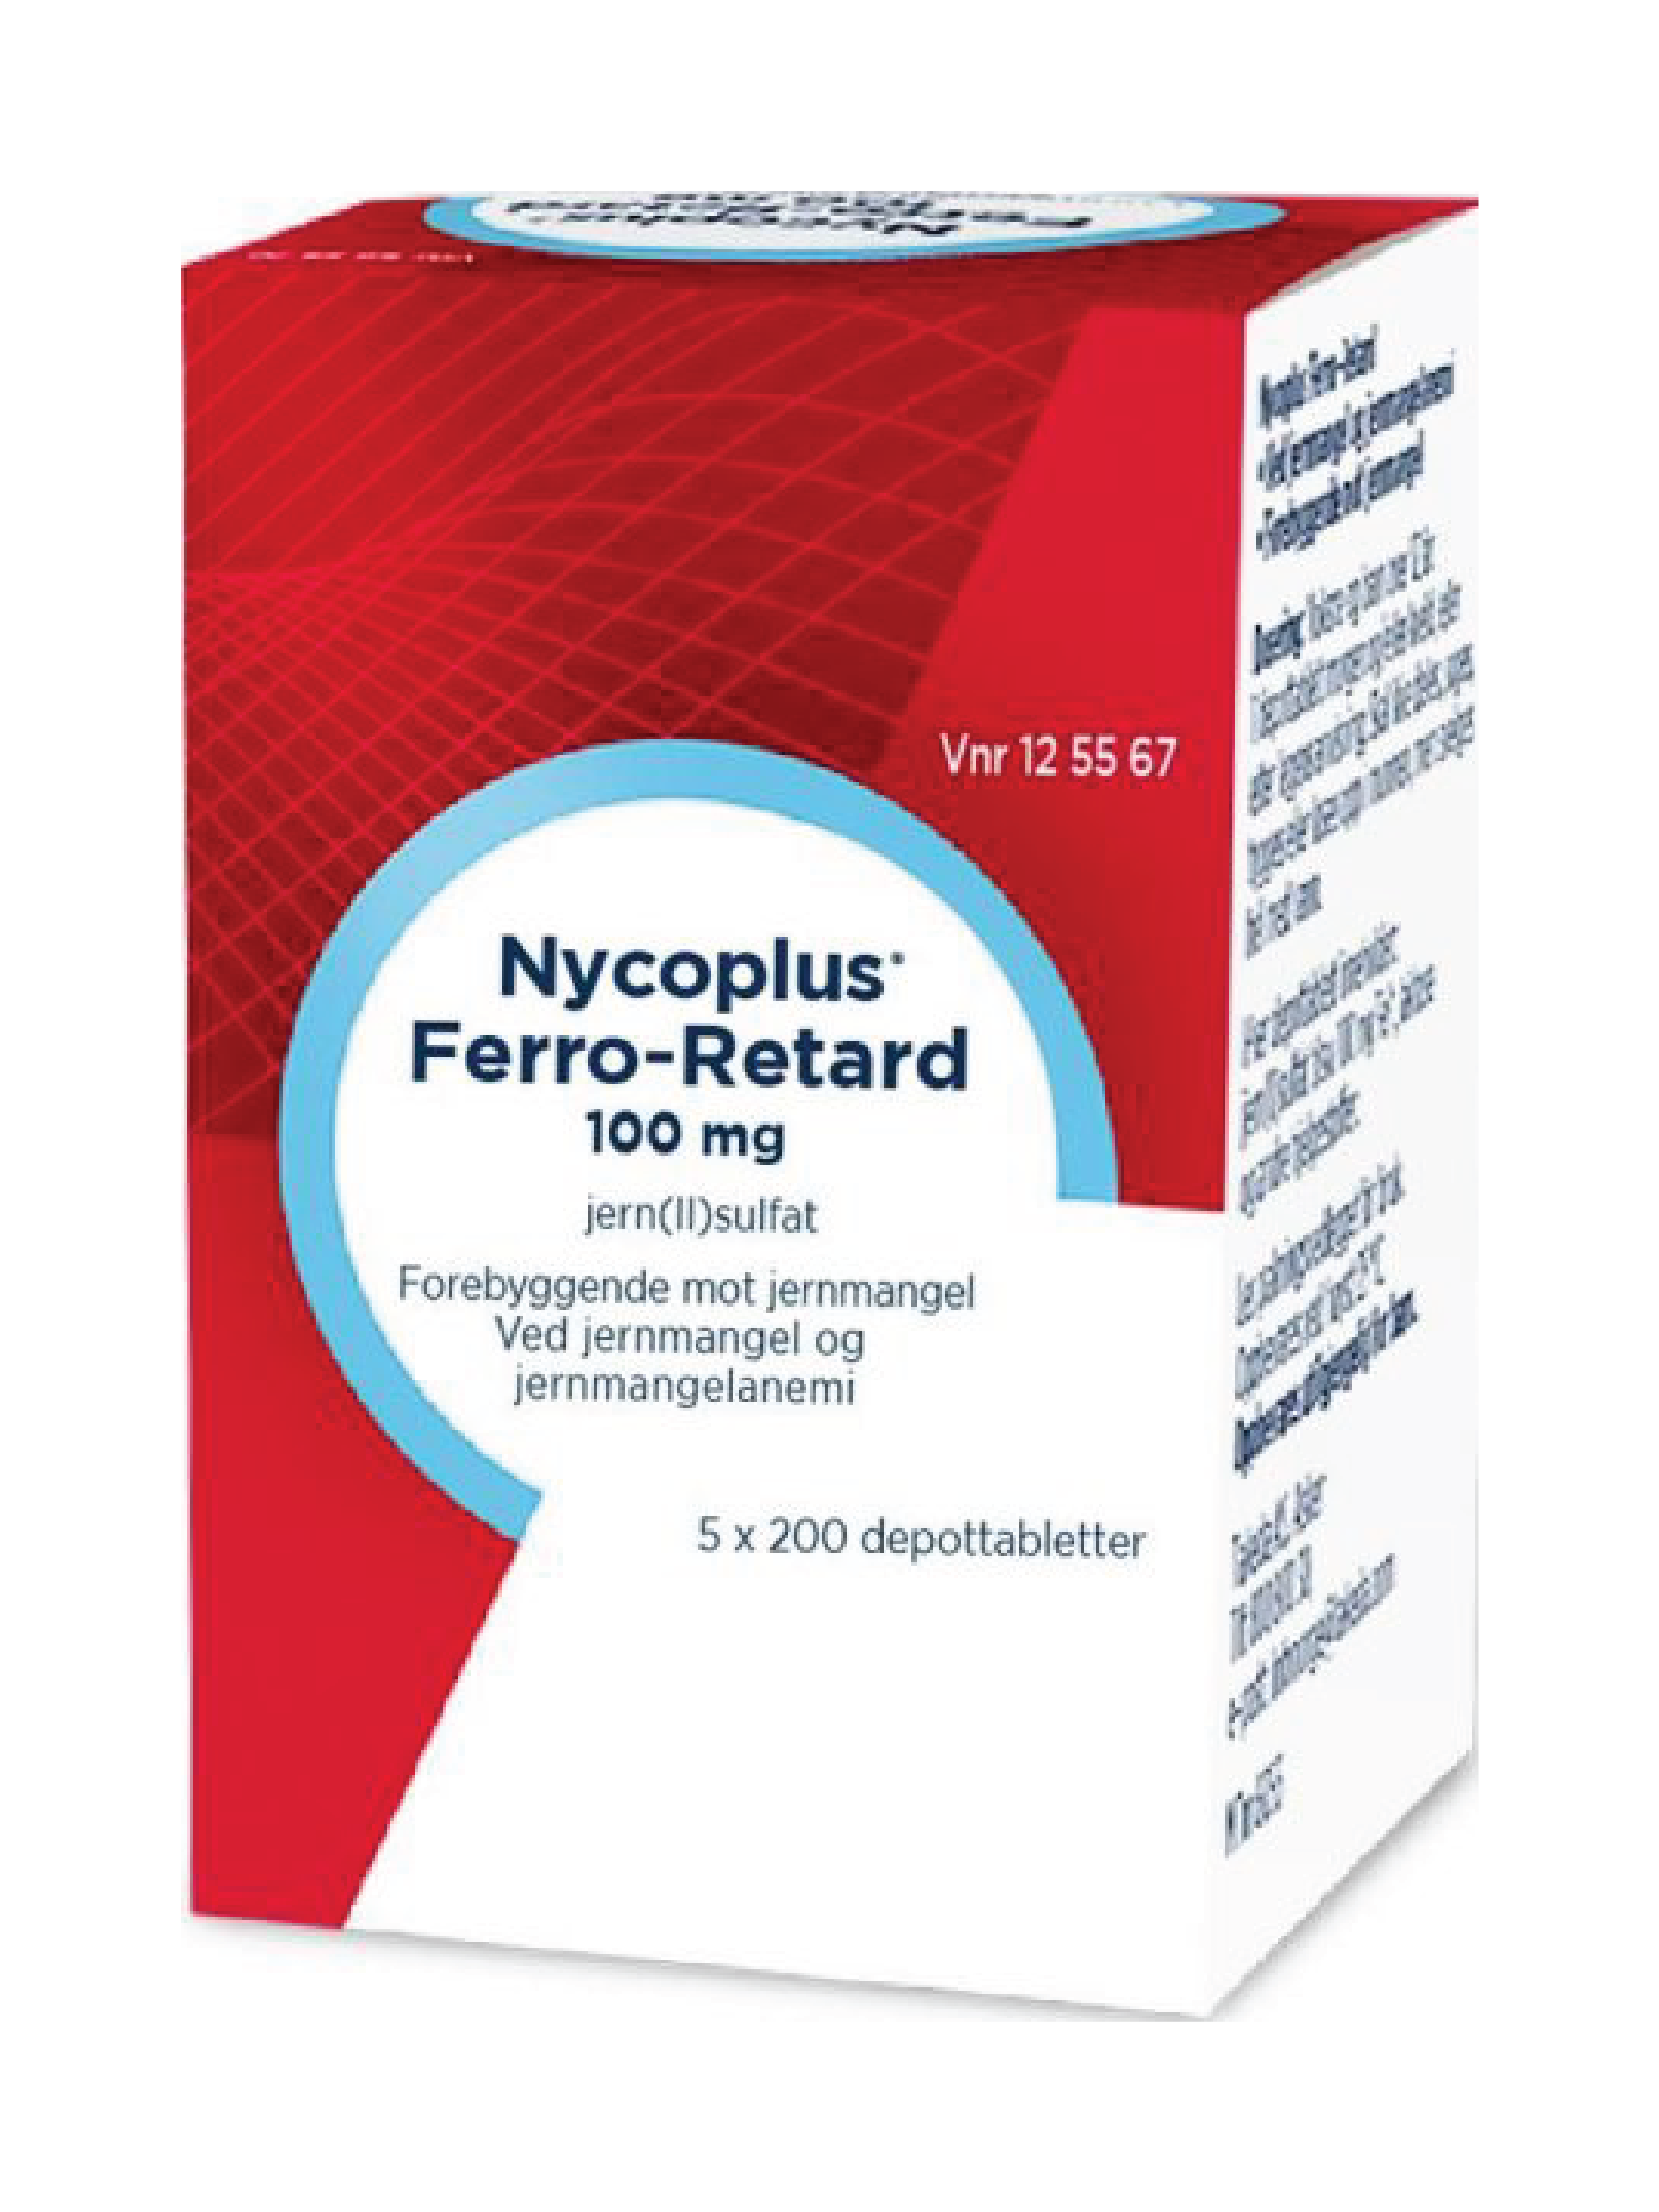 Nycoplus Ferro-Retard 100 mg depottabletter, 5x200 stk.